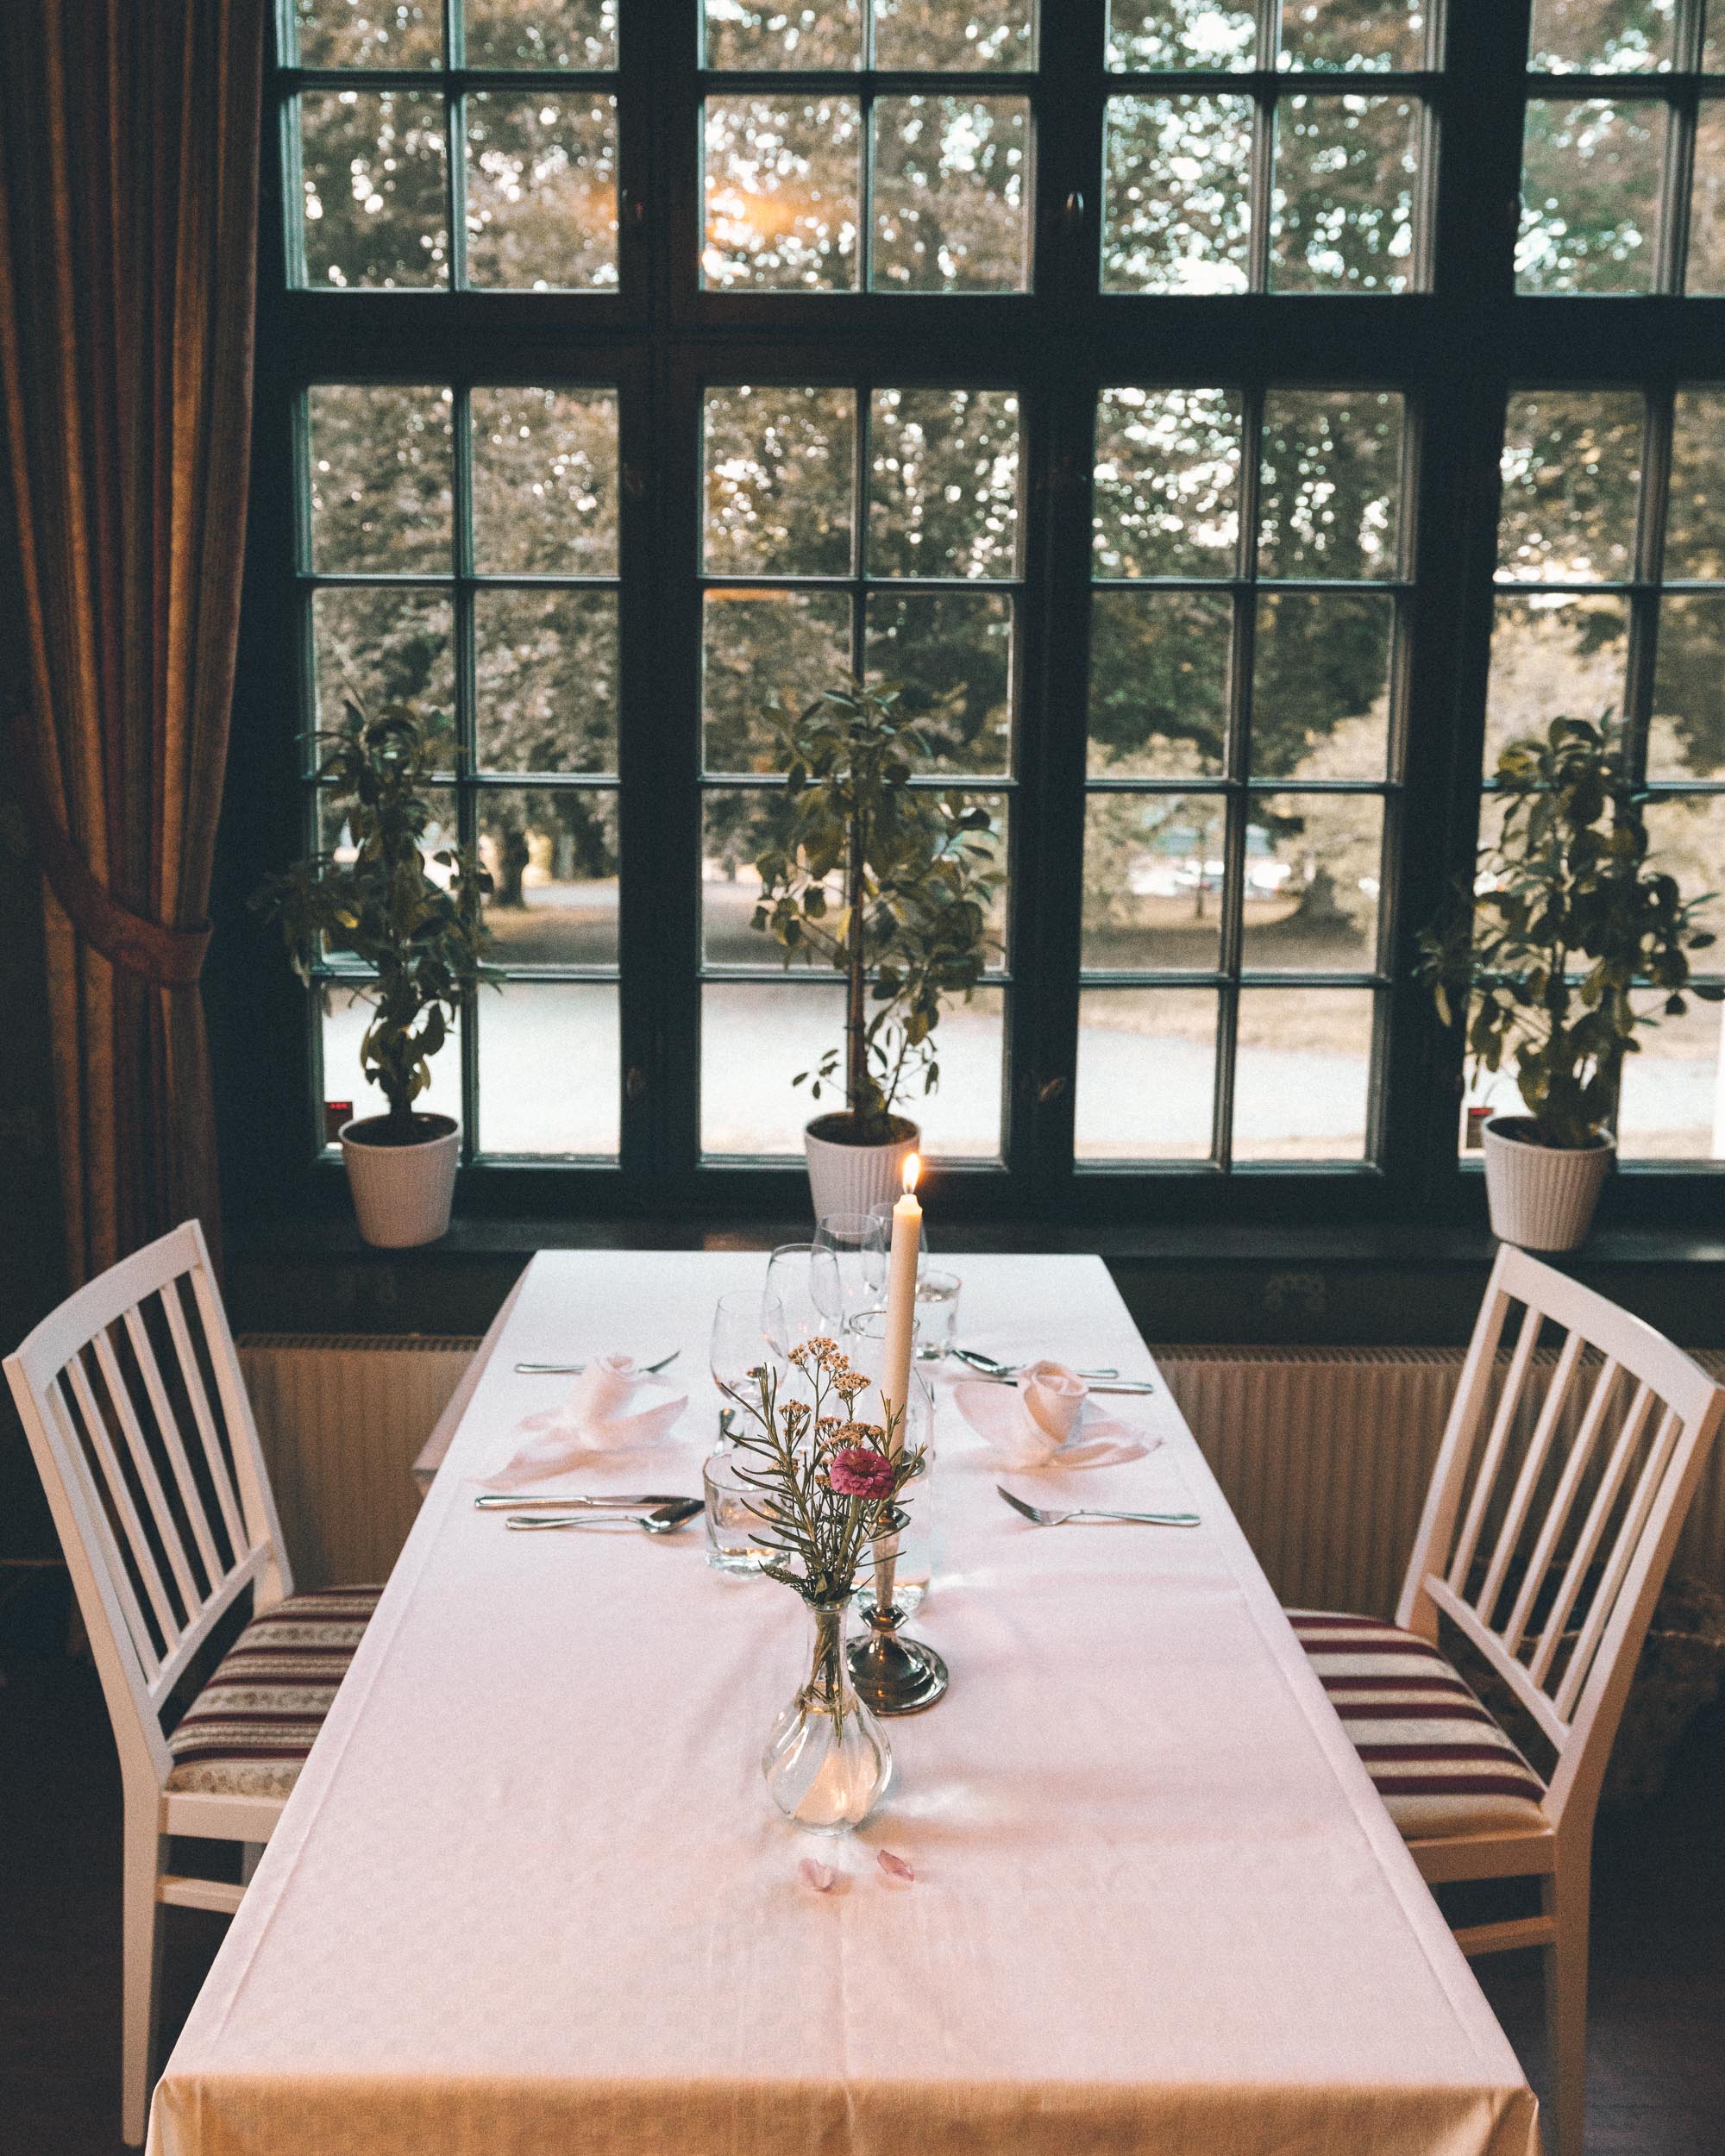 Dinner at Baldersnas Manor | West Sweden Travel Guide via @finduslost 